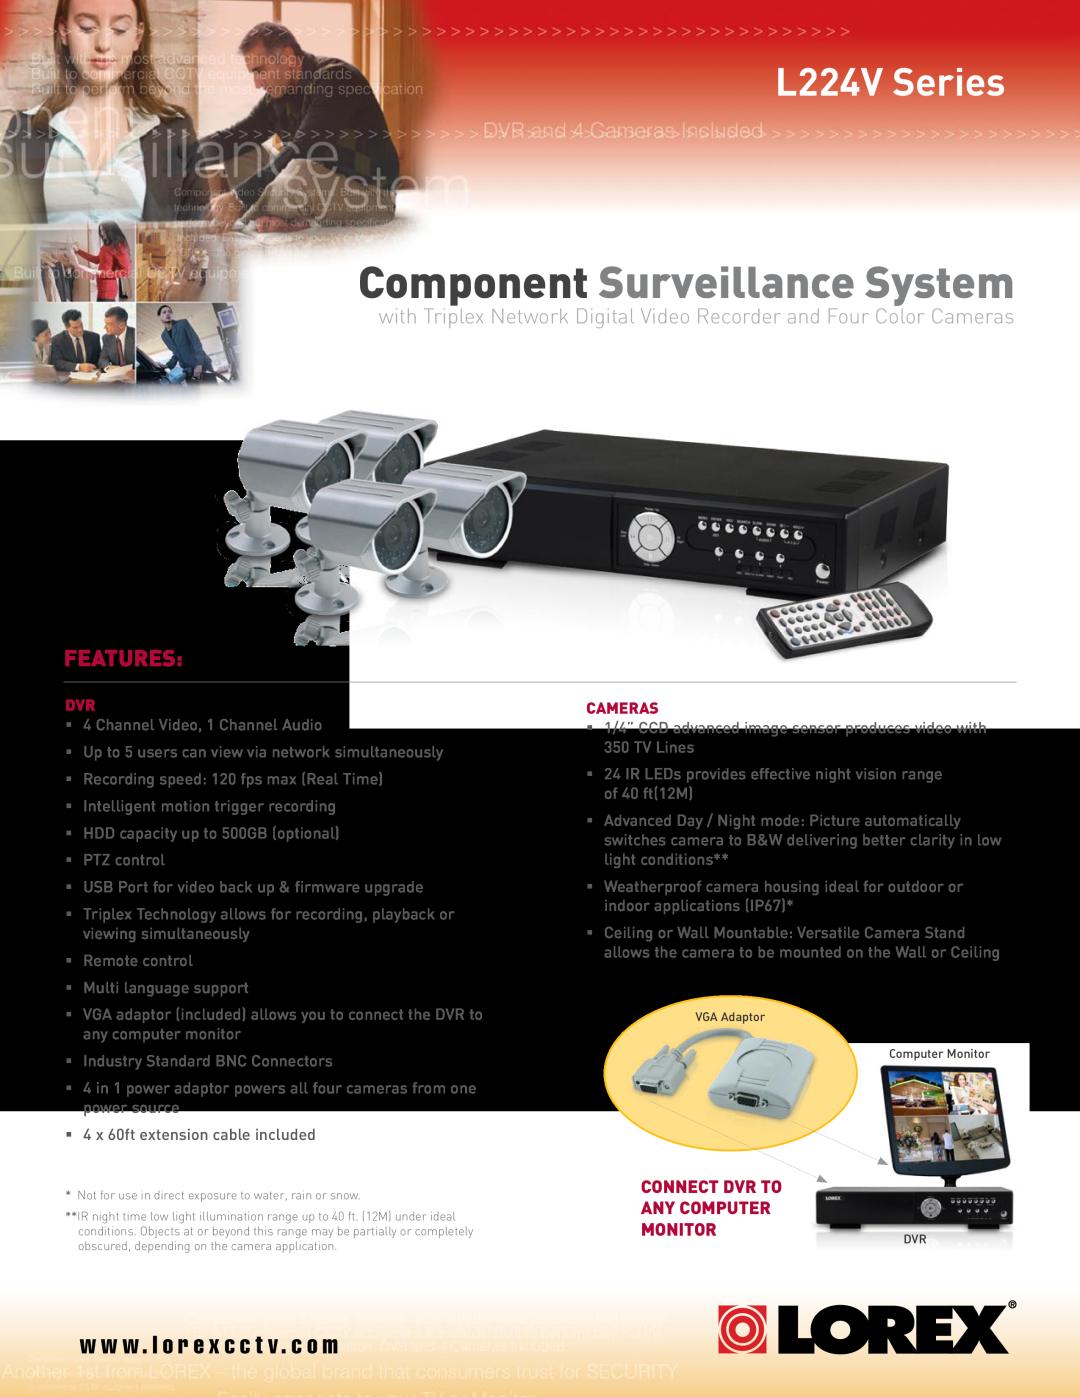 LOREX Technology L224V Series manual Features, Cameras, Component Surveillance System, w w w . l o r e x c c t v . c o m 